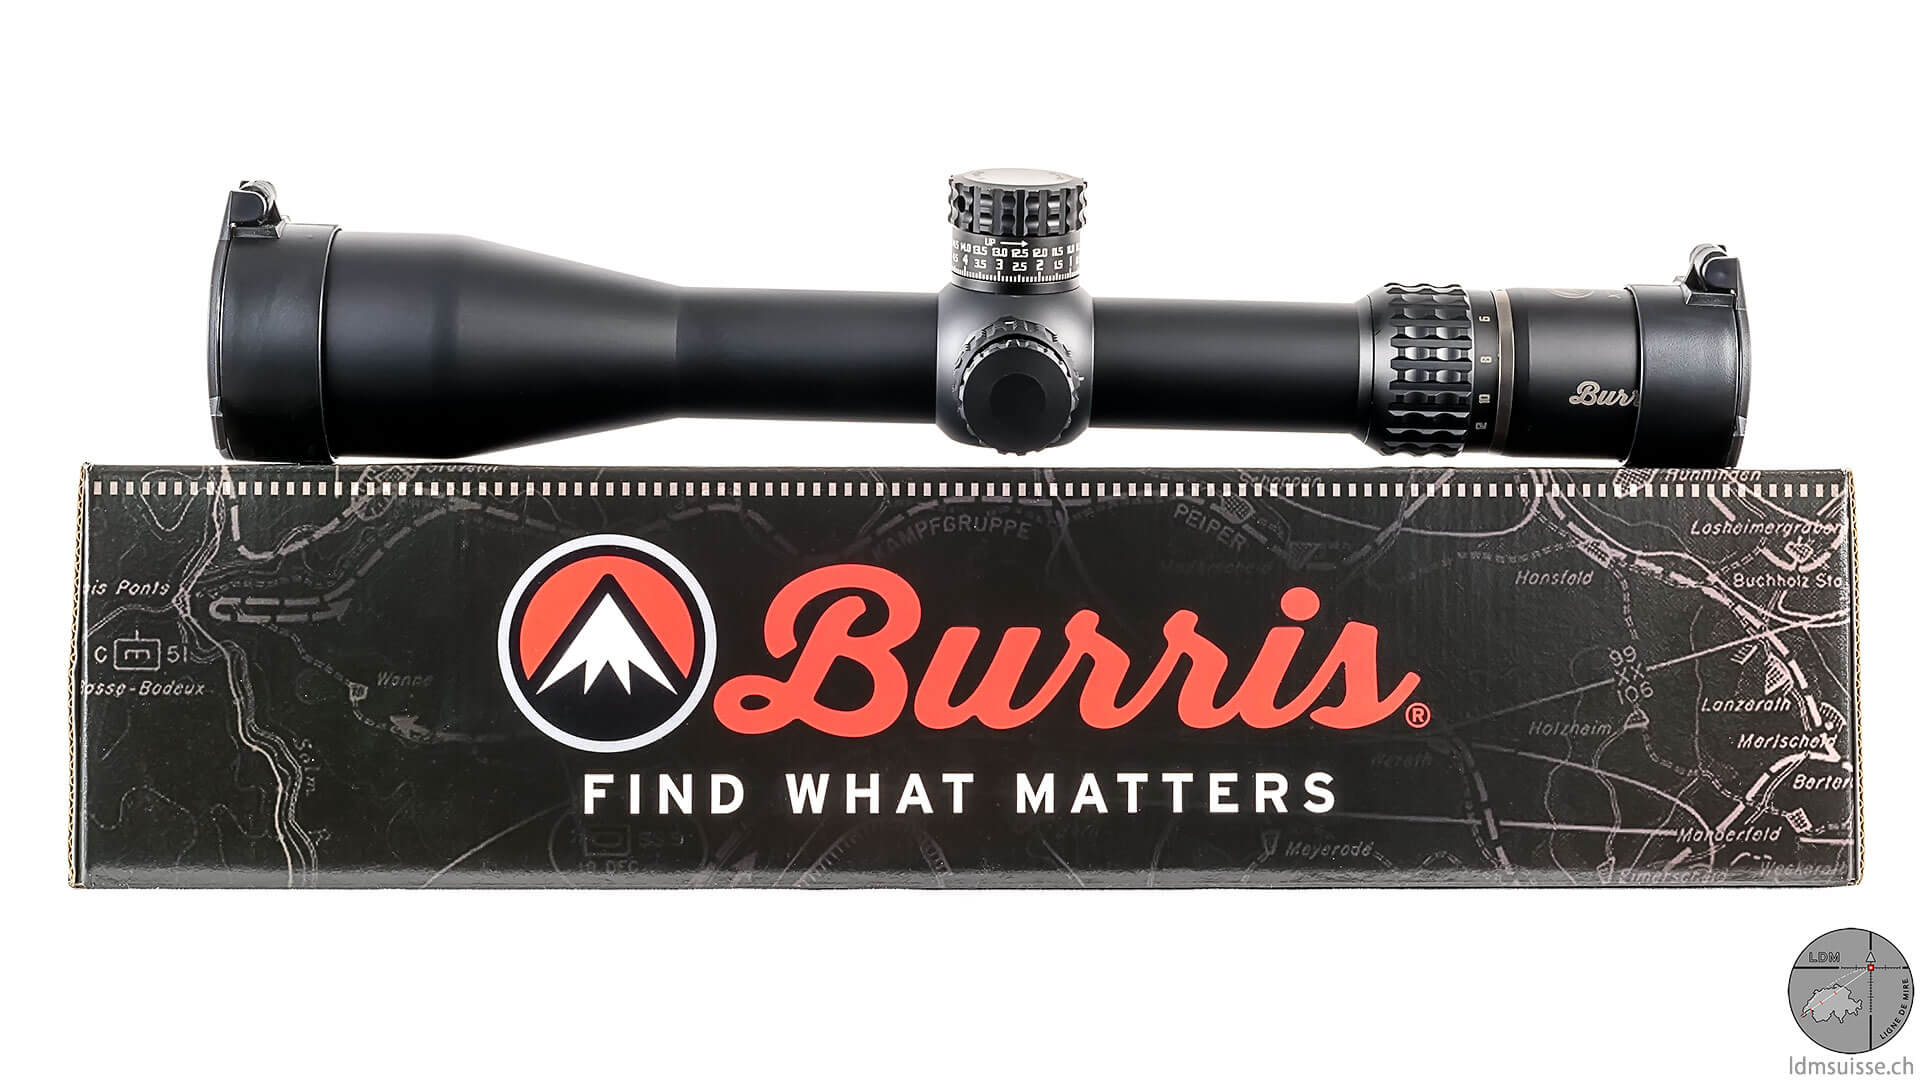 Burris XTR II™ Riflescope 4-20x50mm